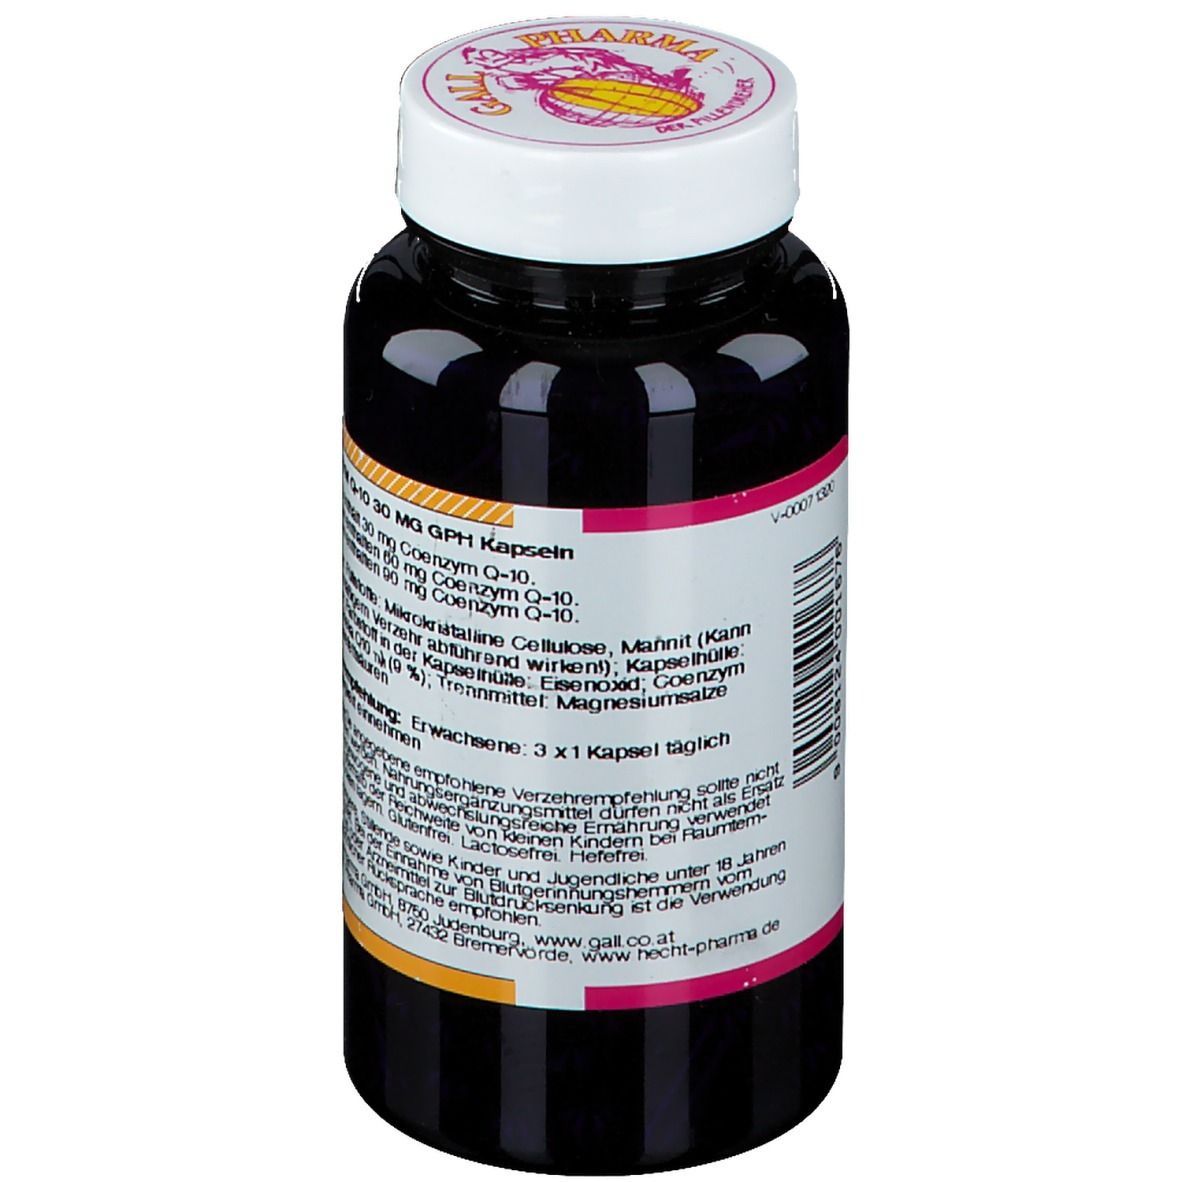 GALL PHARMA Coenzym Q-10 30 mg GPH Kapseln